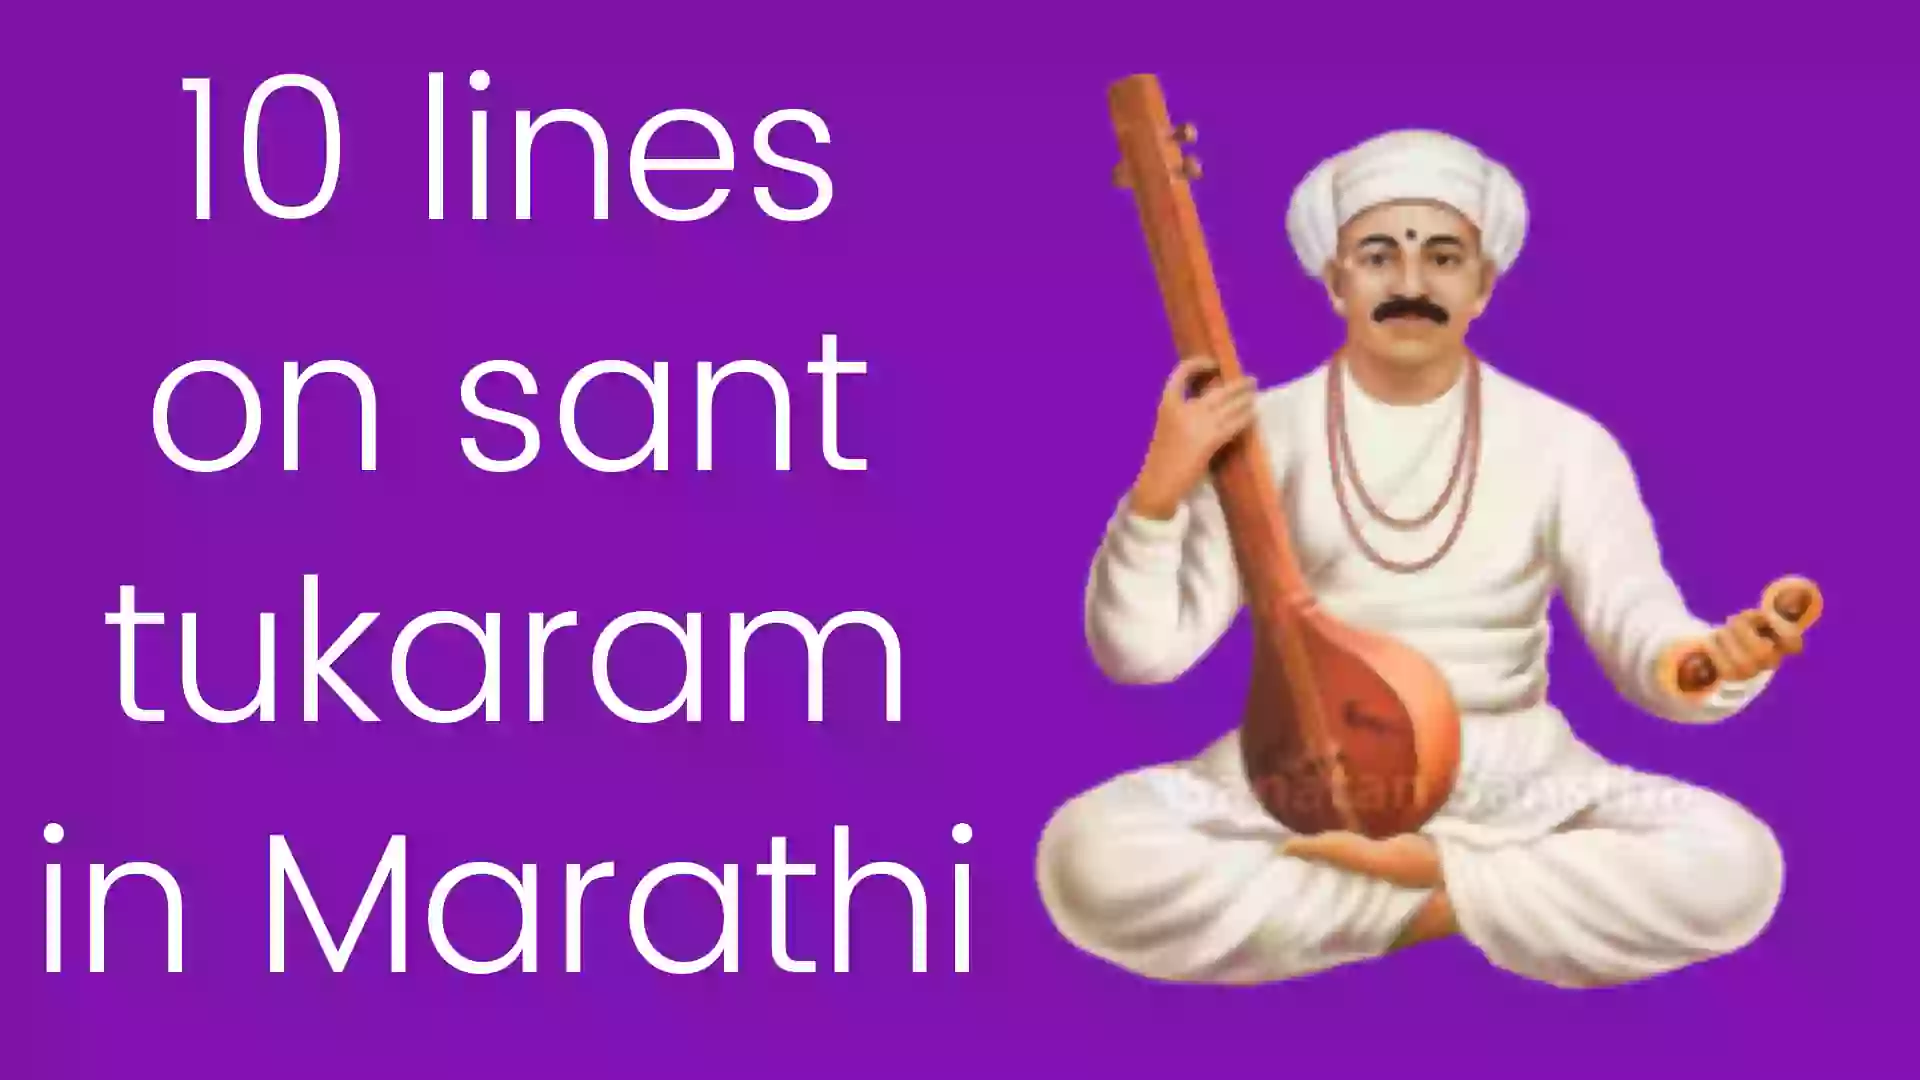 marathi language sant tukaram essay in marathi